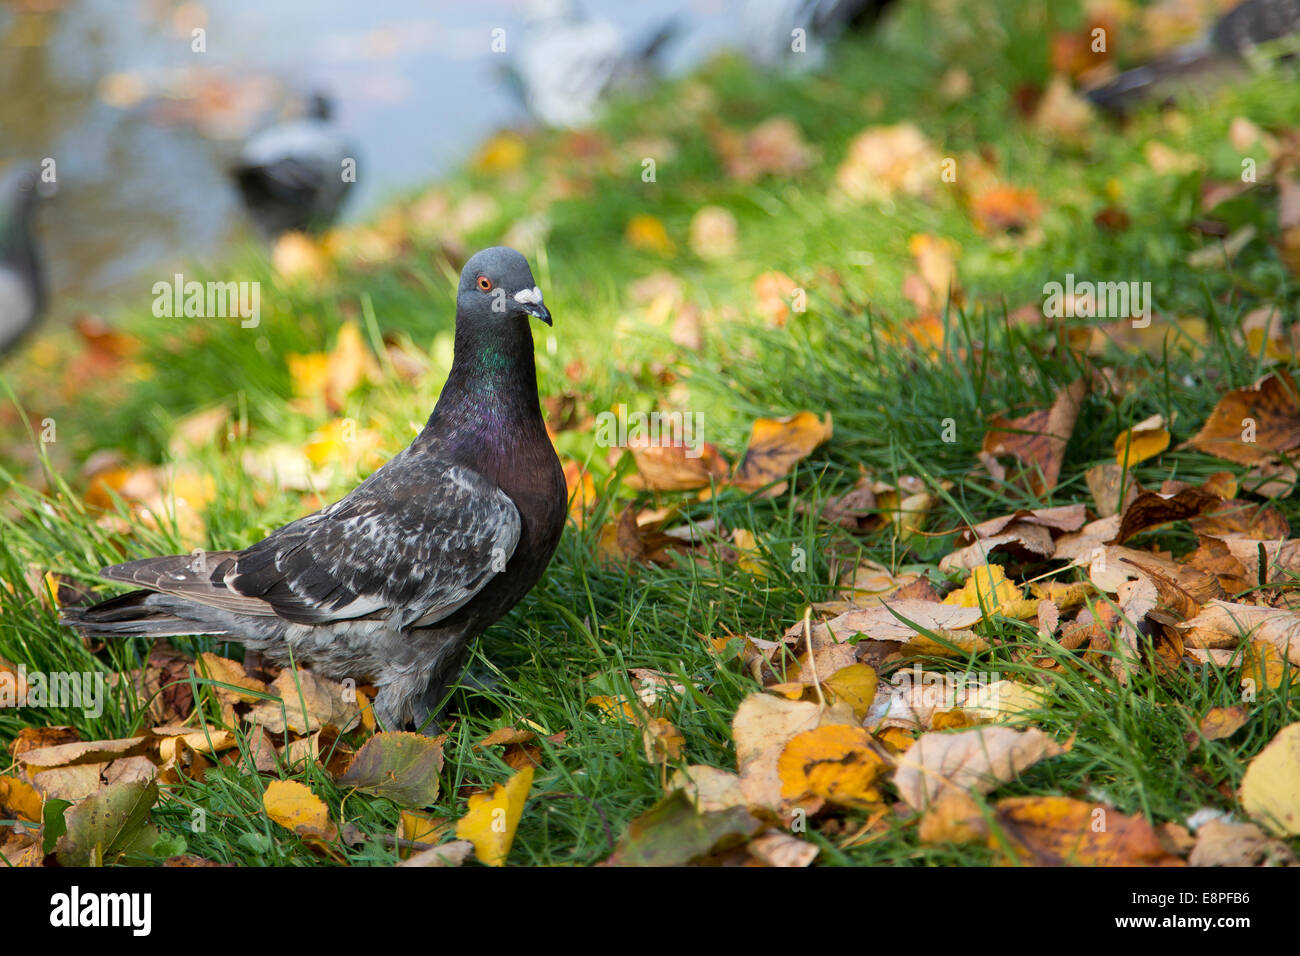 Pigeons in autumn scenery Stock Photo